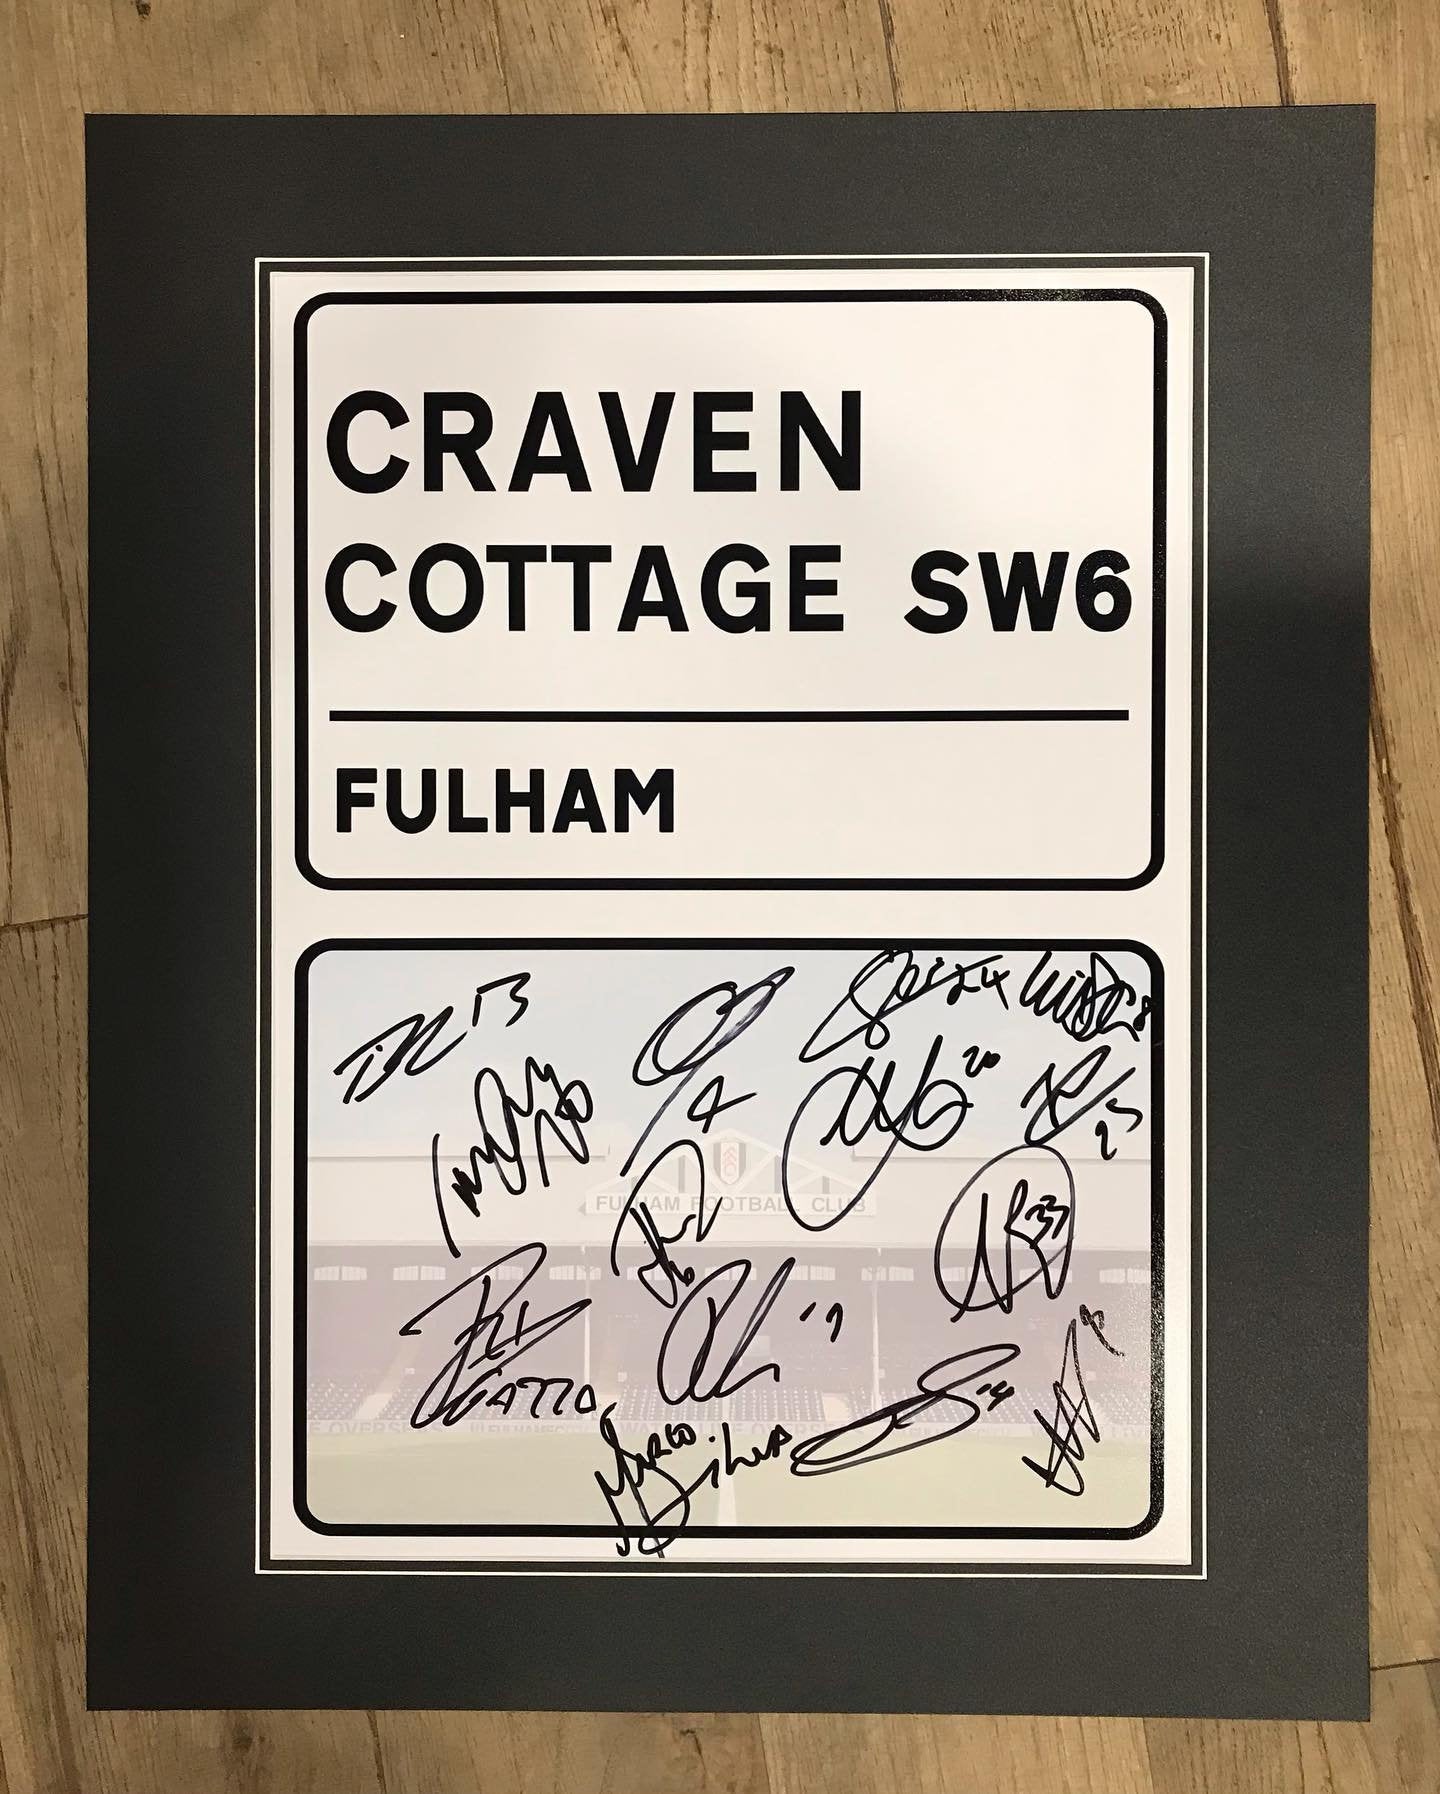 Champions 2021/22 Fulham - 20x16in multi-signed photo mount - FFC memorabilia, gift, display